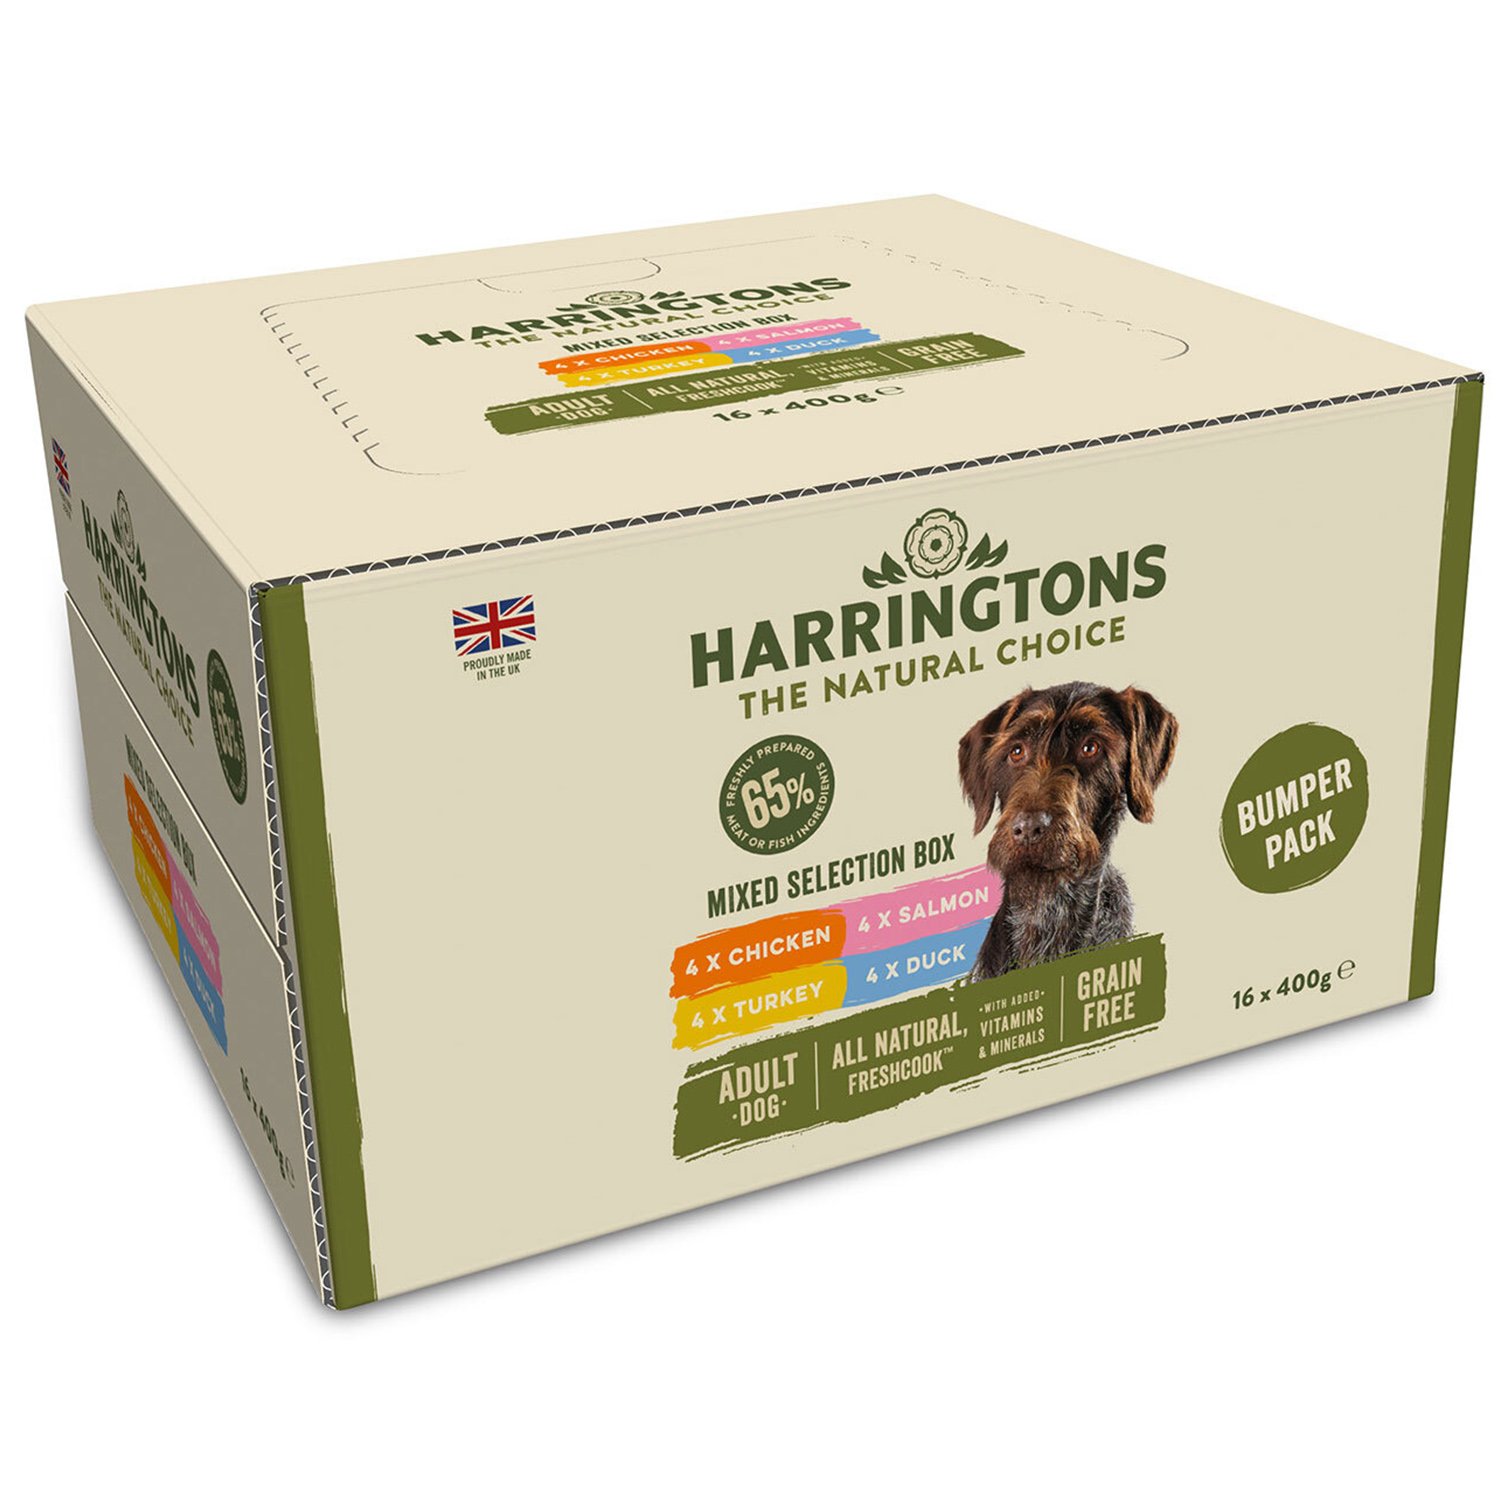 Harringtons Mixed Selection Box Wet Dog Food Image 1